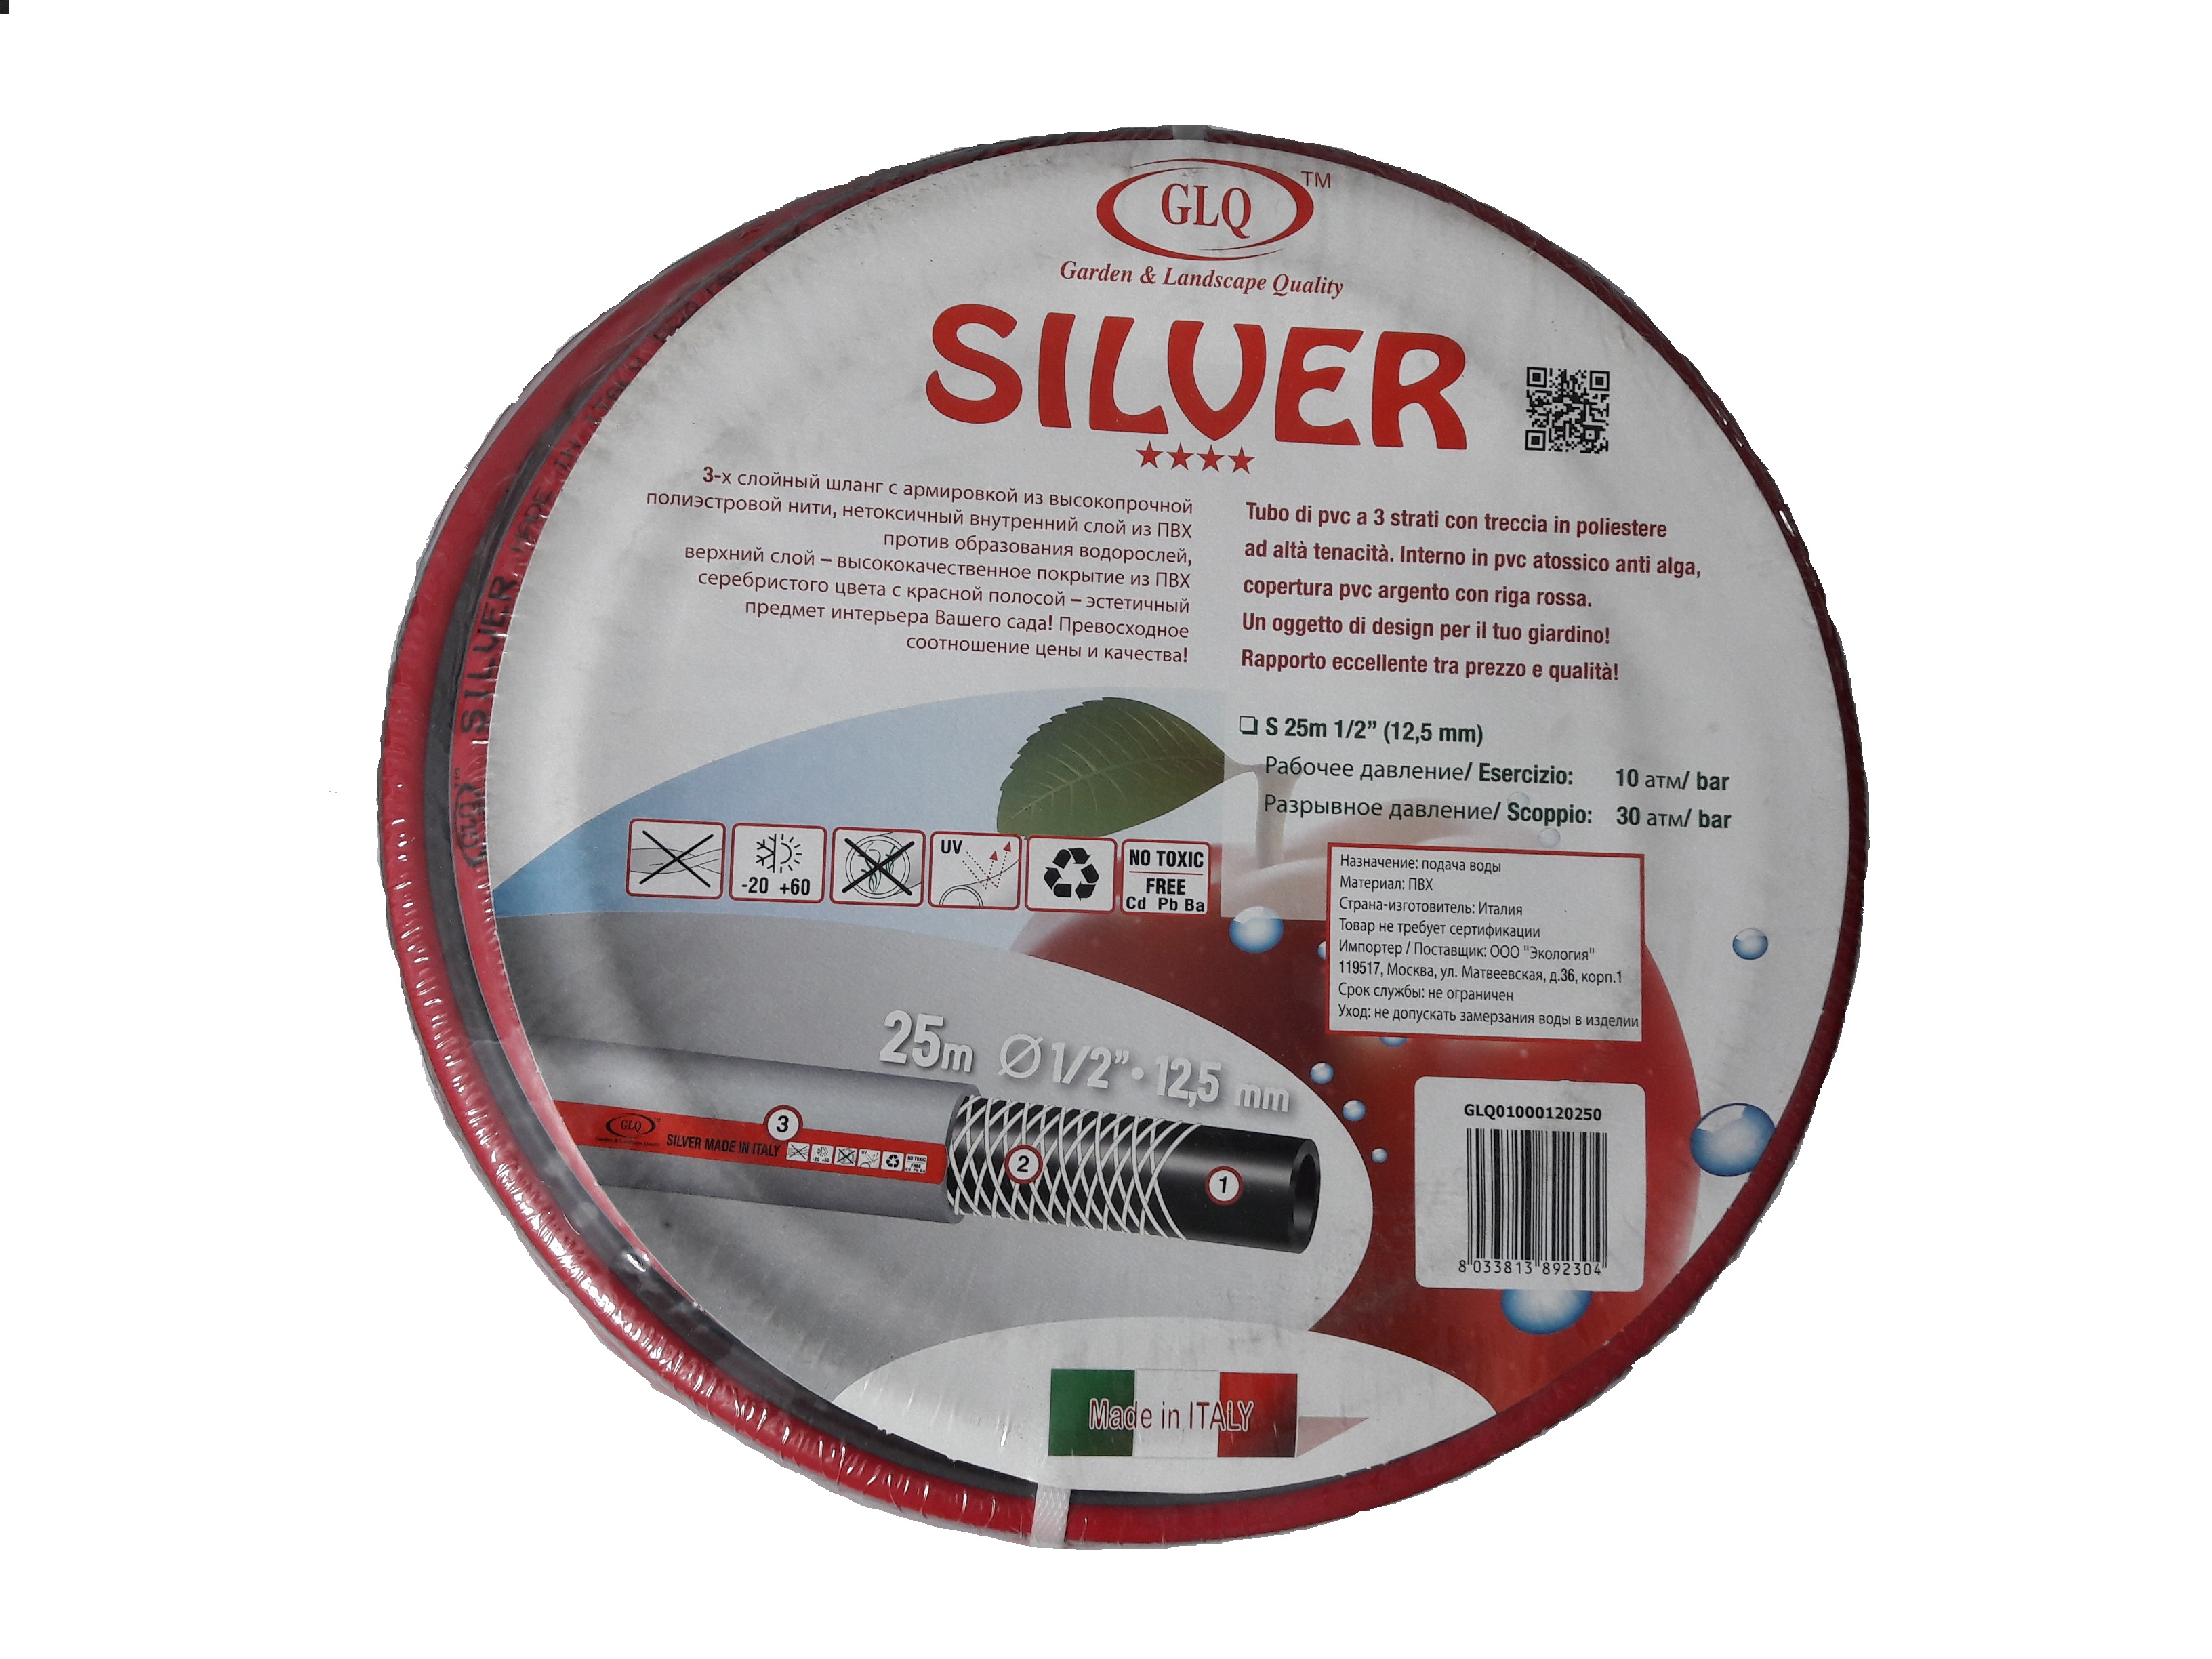 фото Glq silver 5/8 50м серебристый армированный 3-х слойный шланг p=10 bar